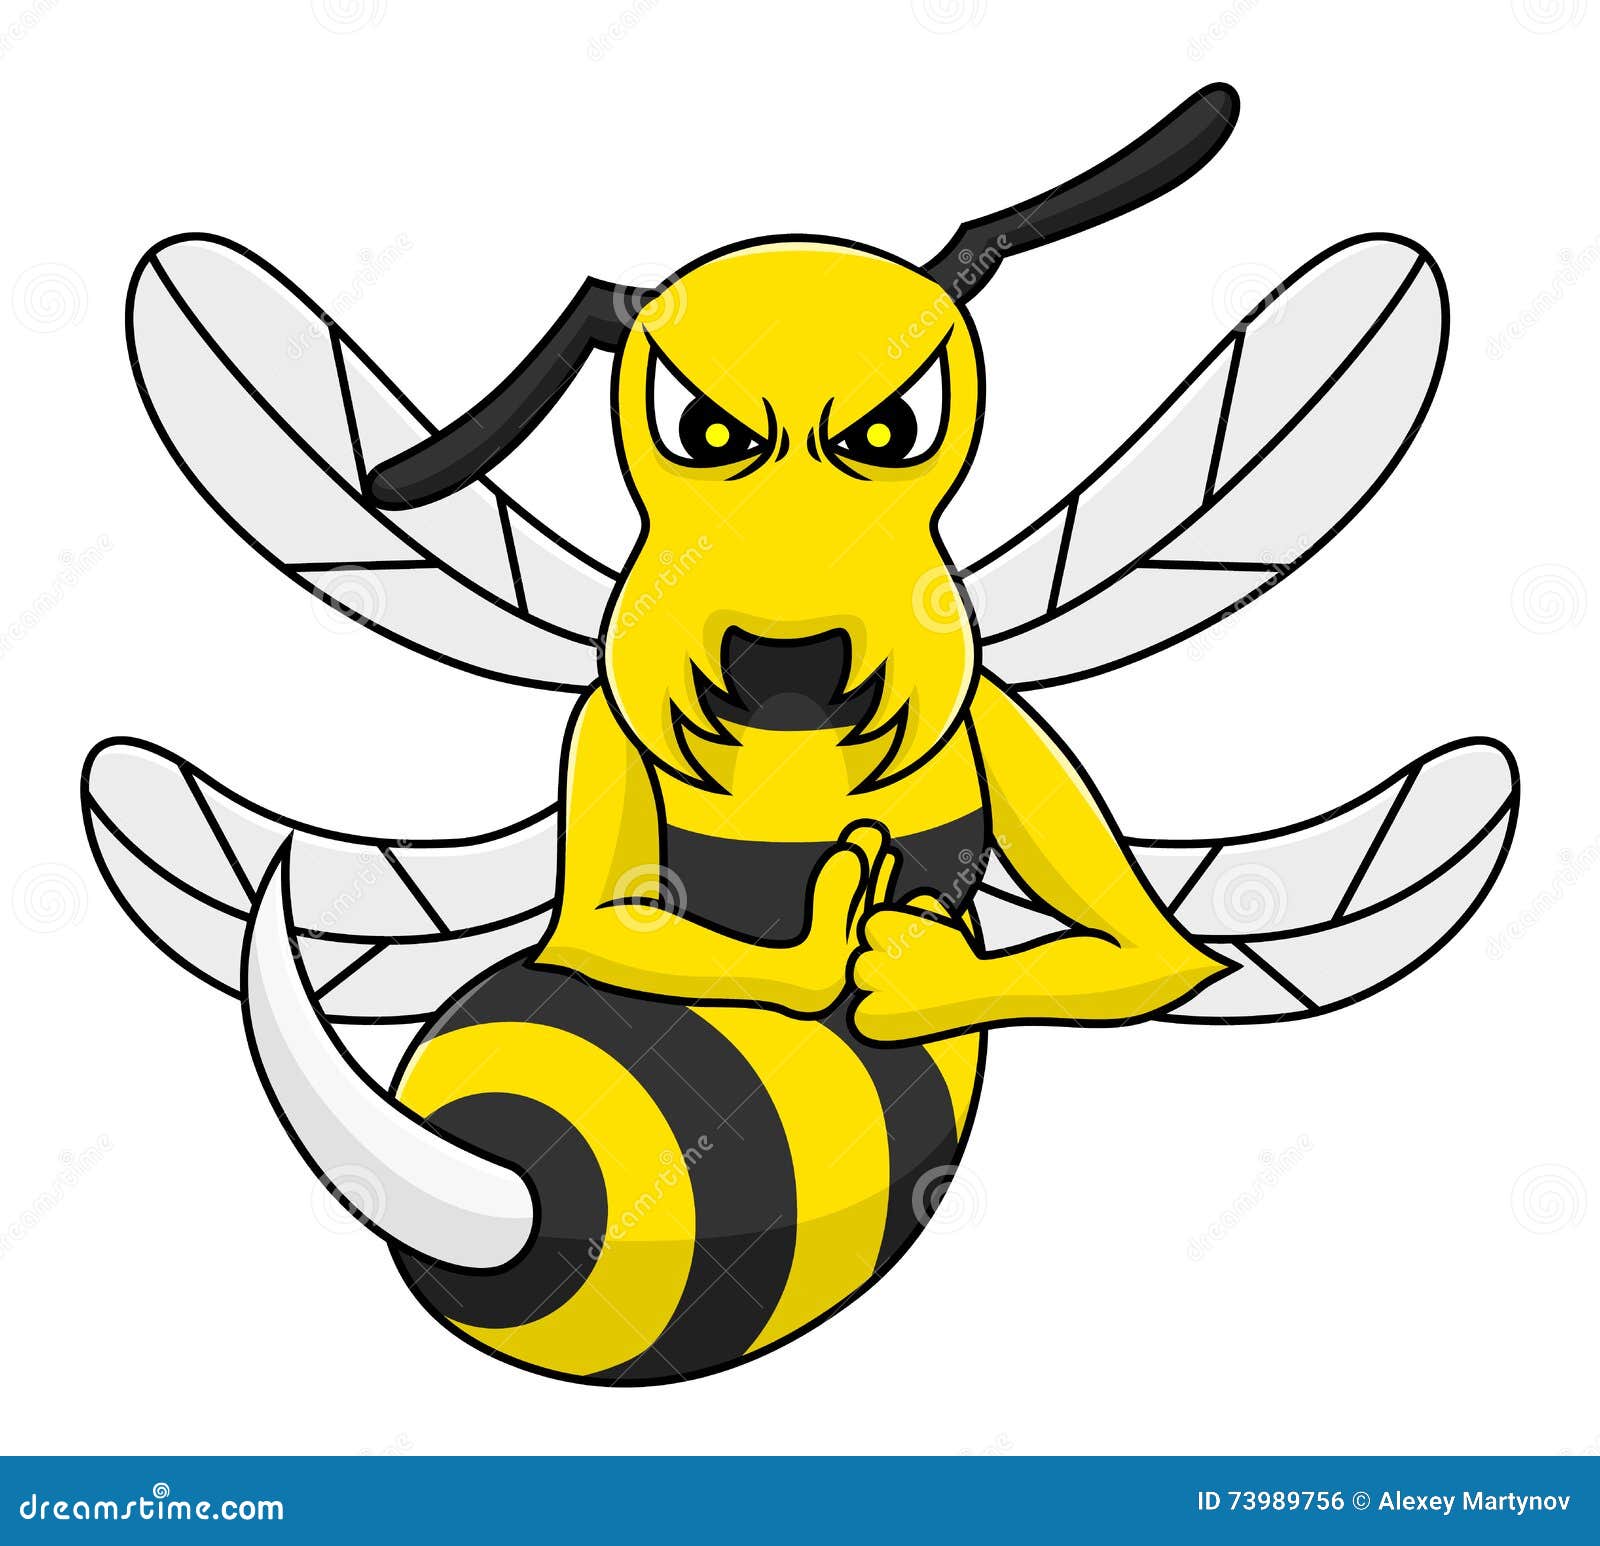 Cartoon Hornet Mascot Vector Illustration | CartoonDealer.com #138788394